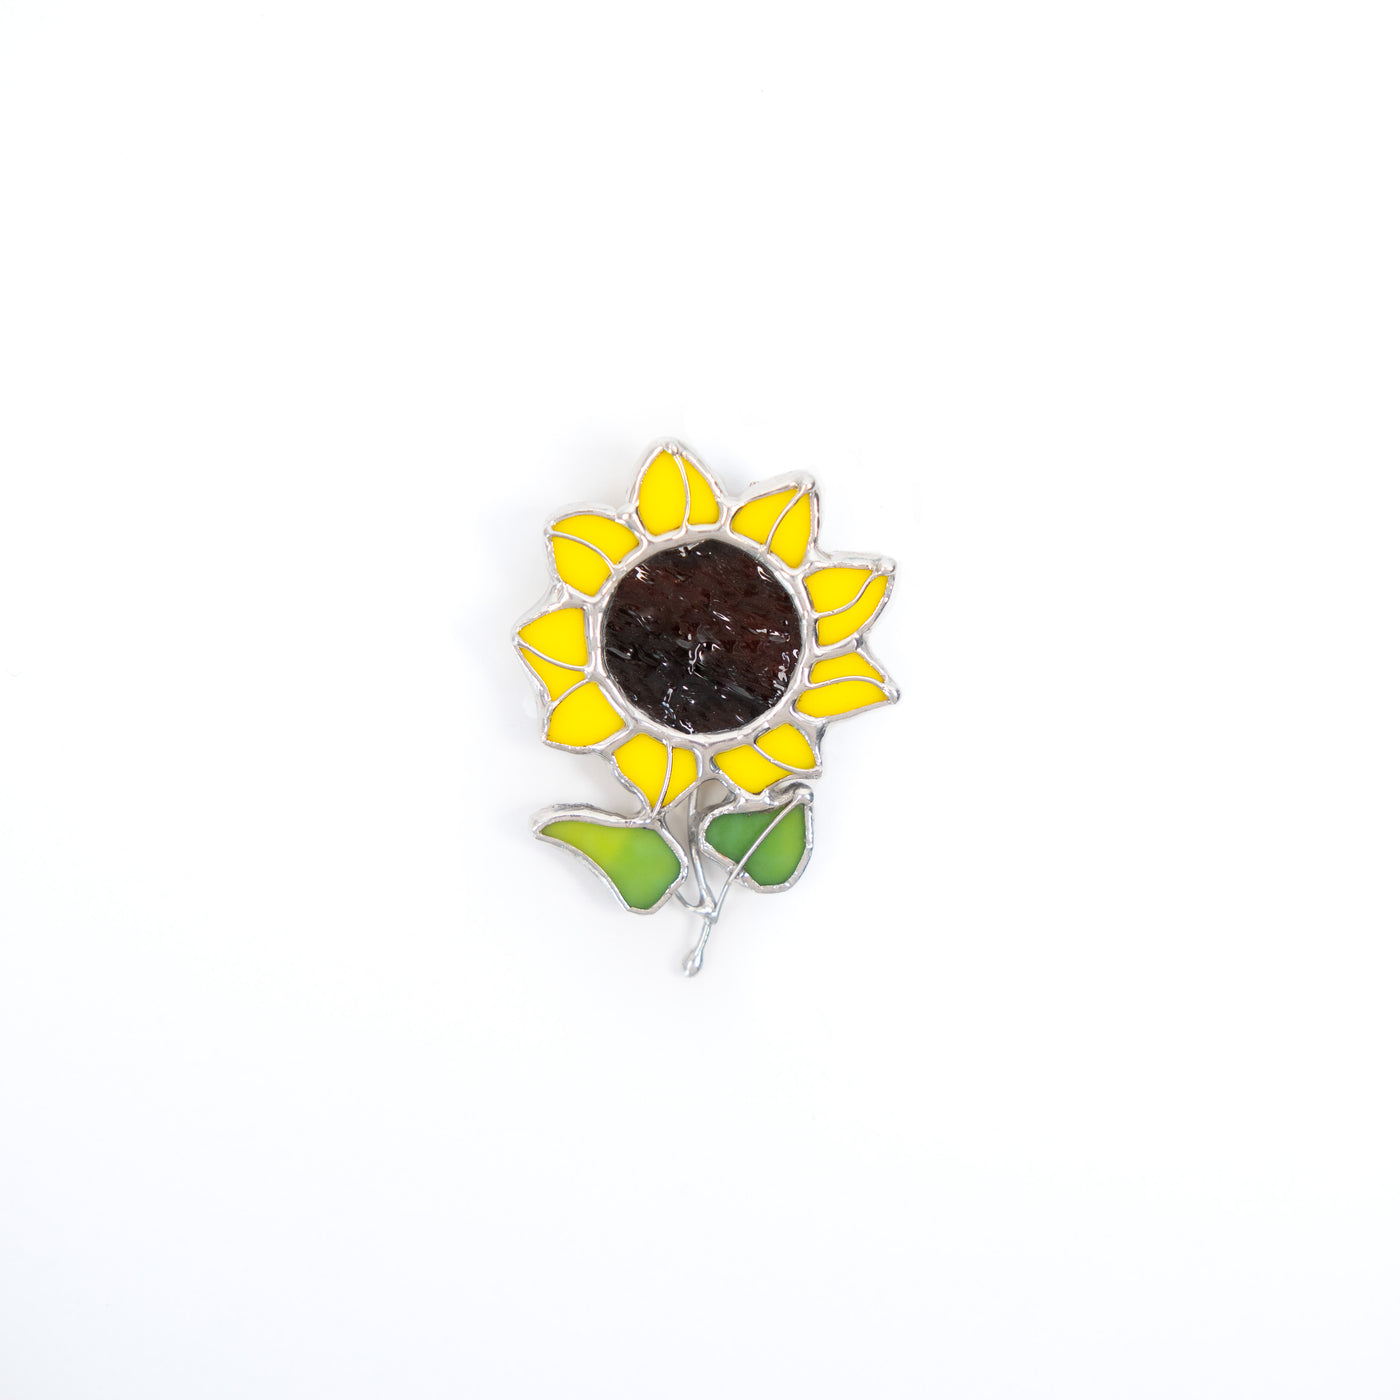 Ukrainian jewelry stained glass sunflower brooch